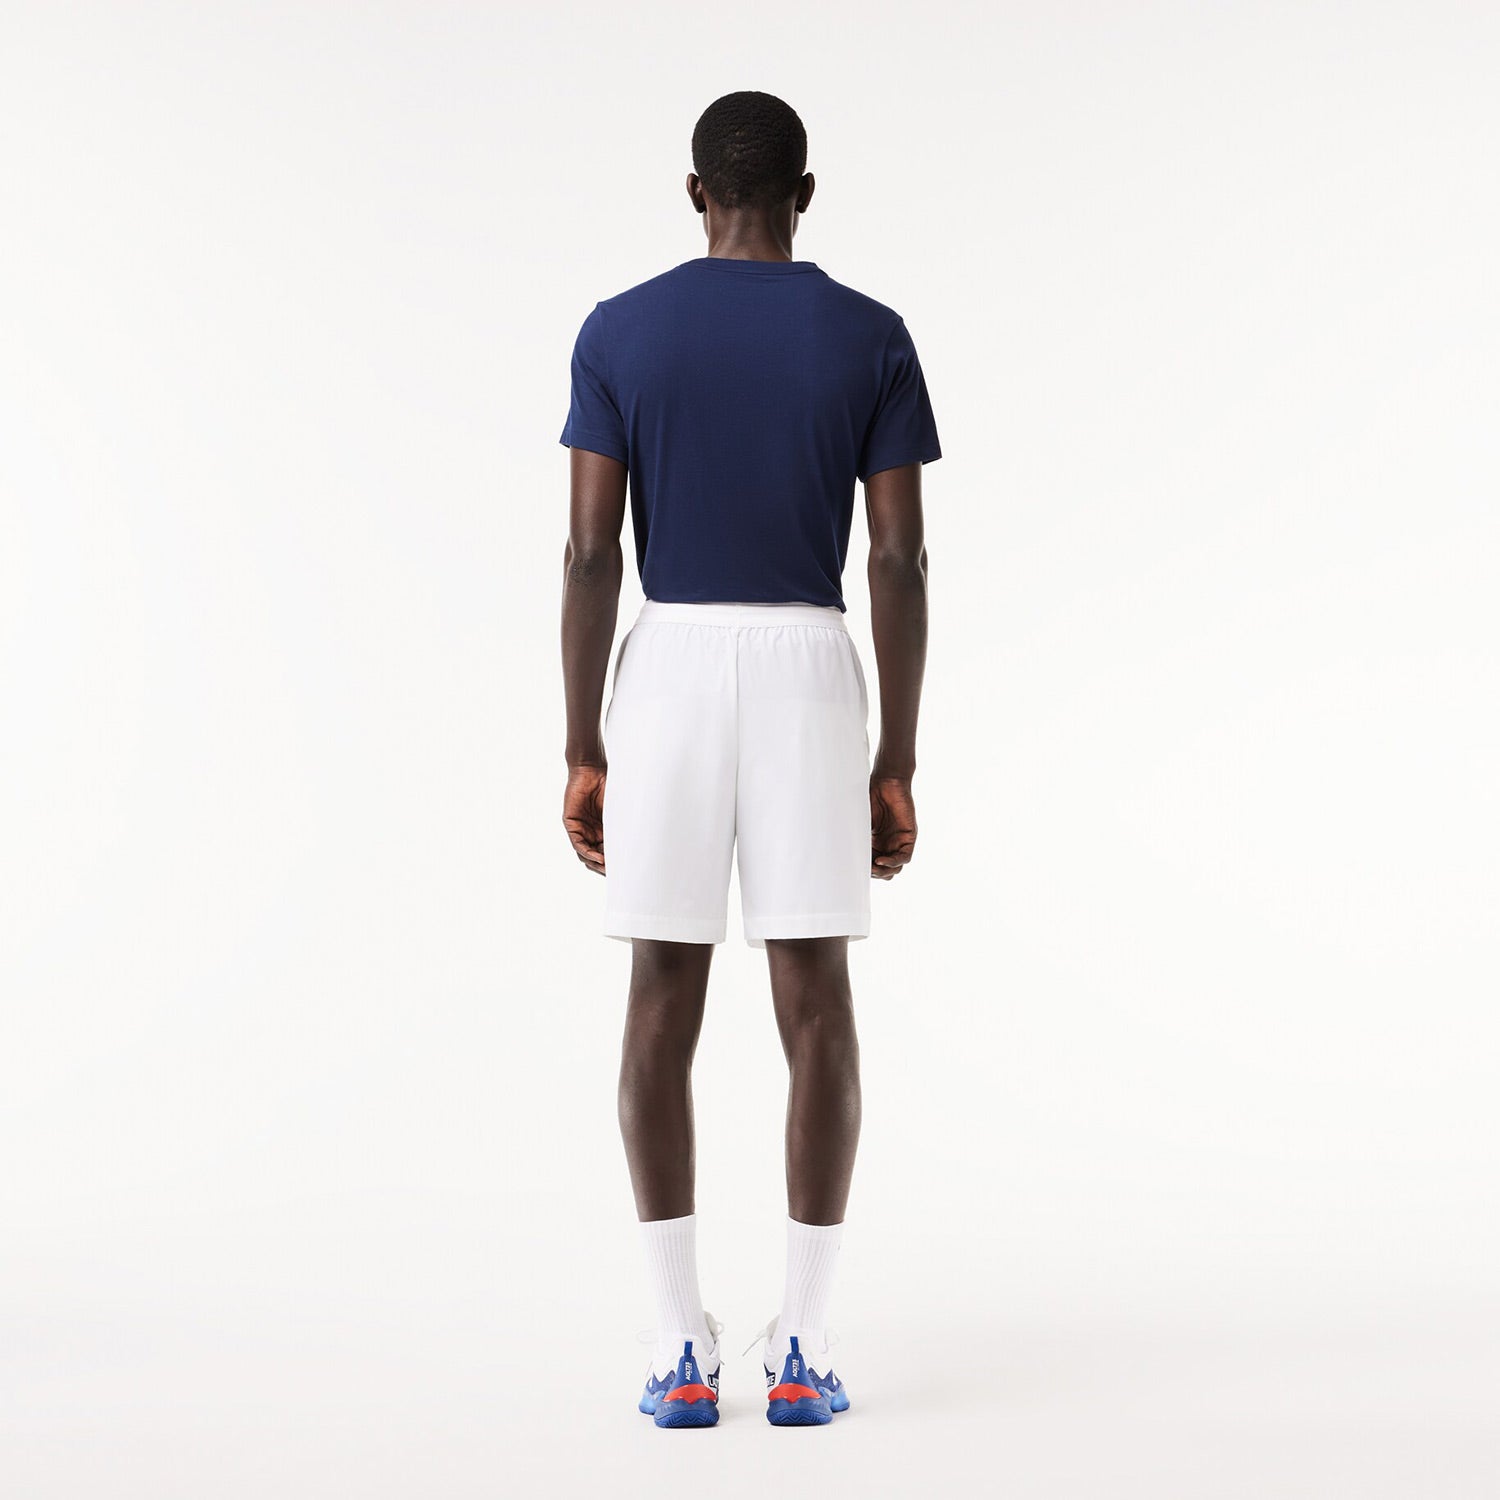 Lacoste Men's Technical Woven Tennis Shorts - White (2)